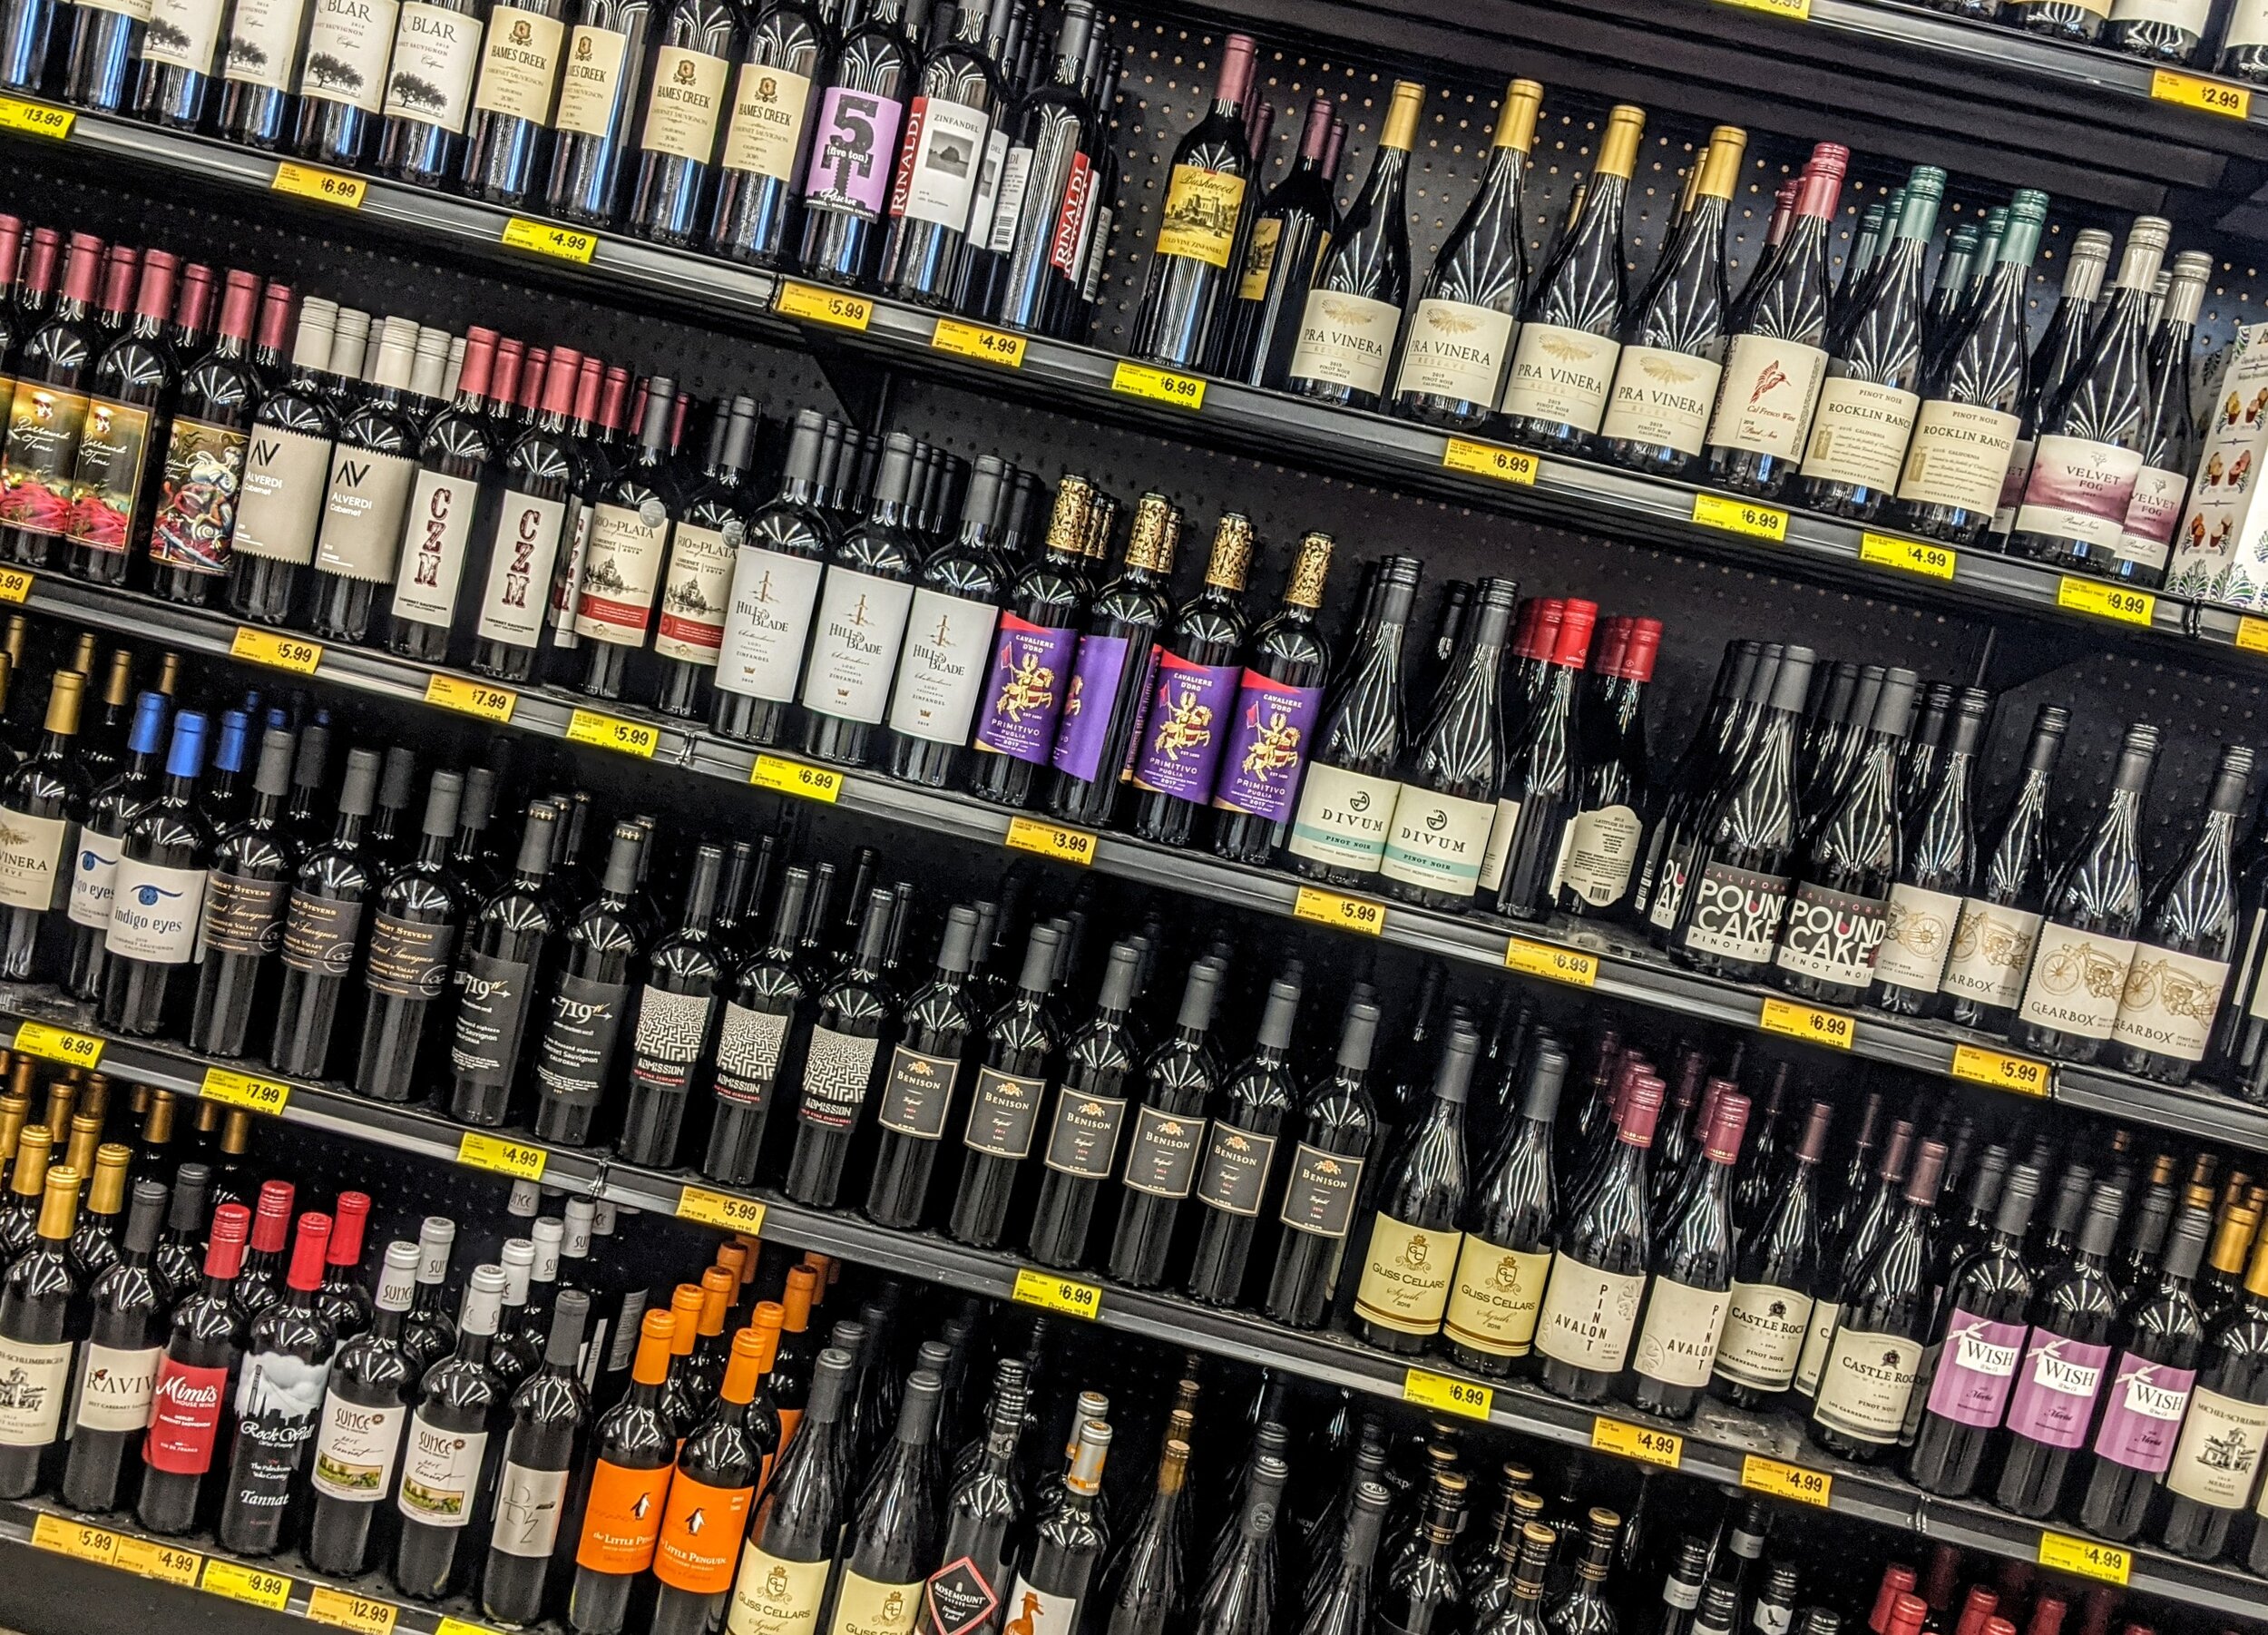 moscato vs riesling - wine store shelf